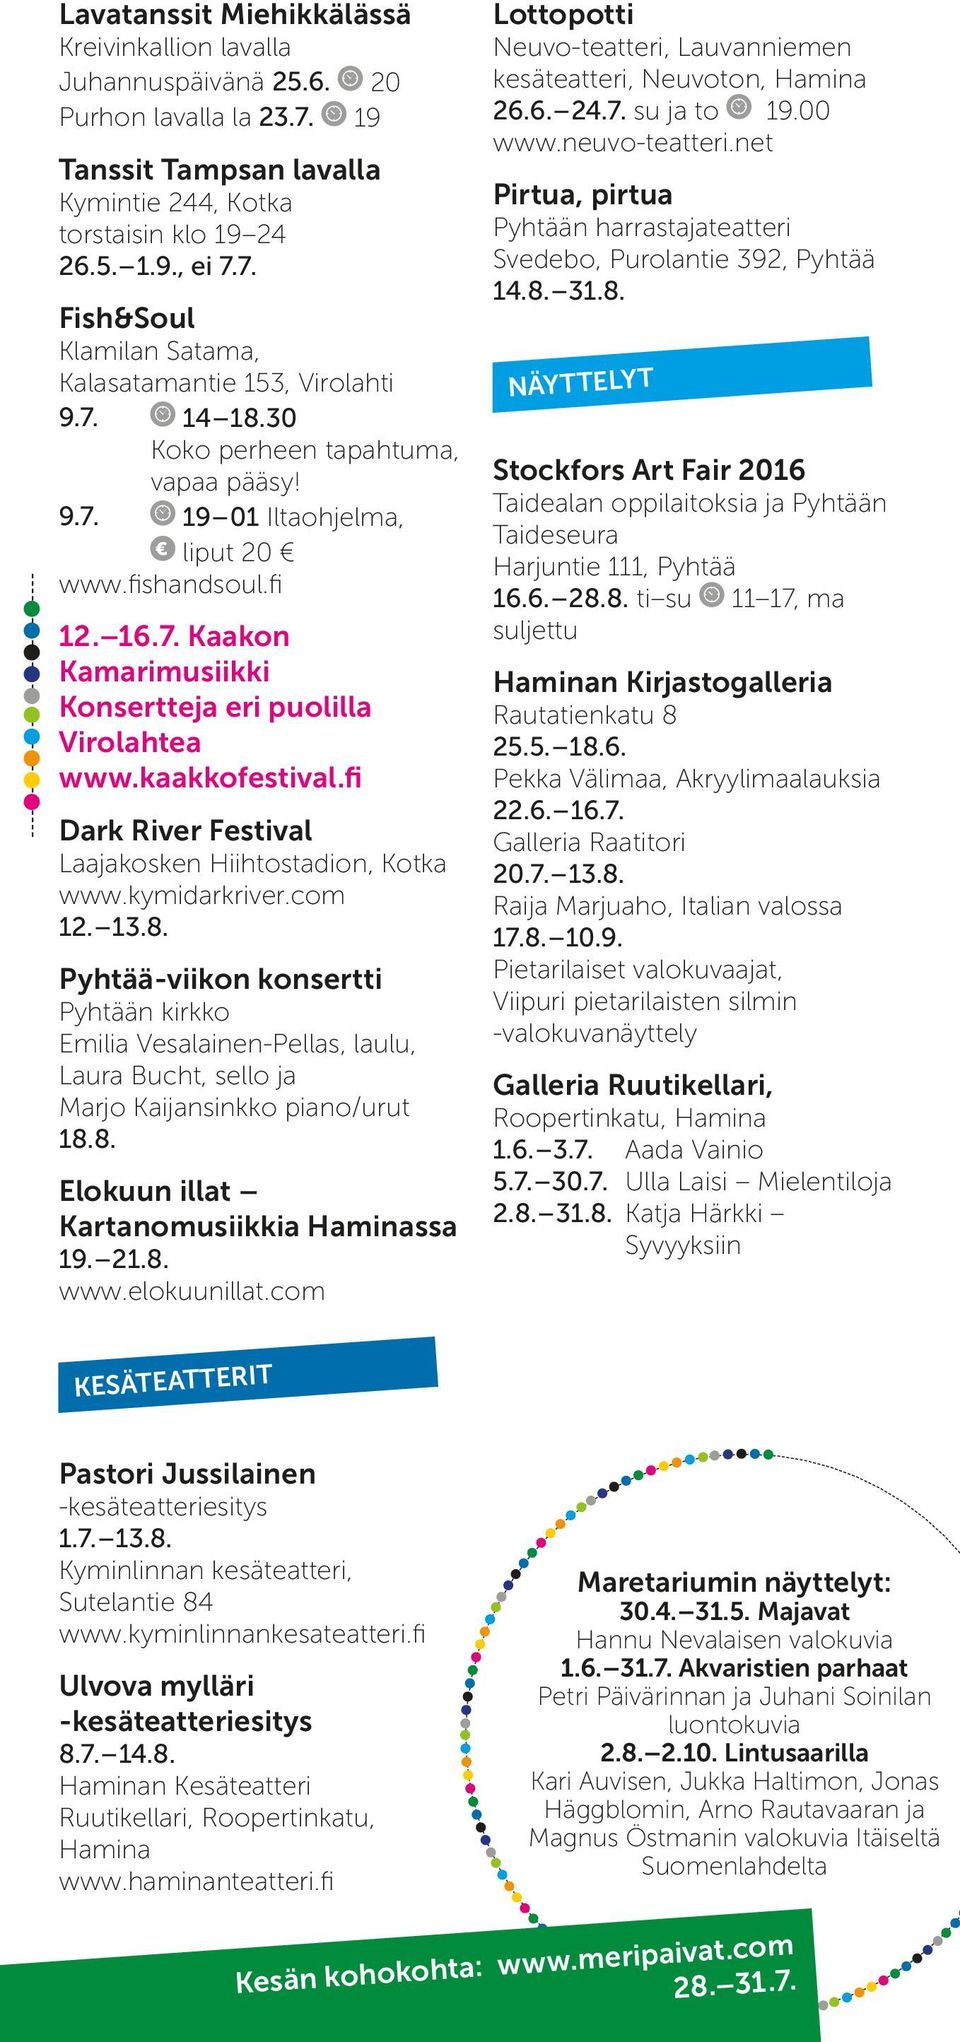 fi Dark River Festival Laajakosken Hiihtostadion, Kotka www.kymidarkriver.com 12. 13.8.